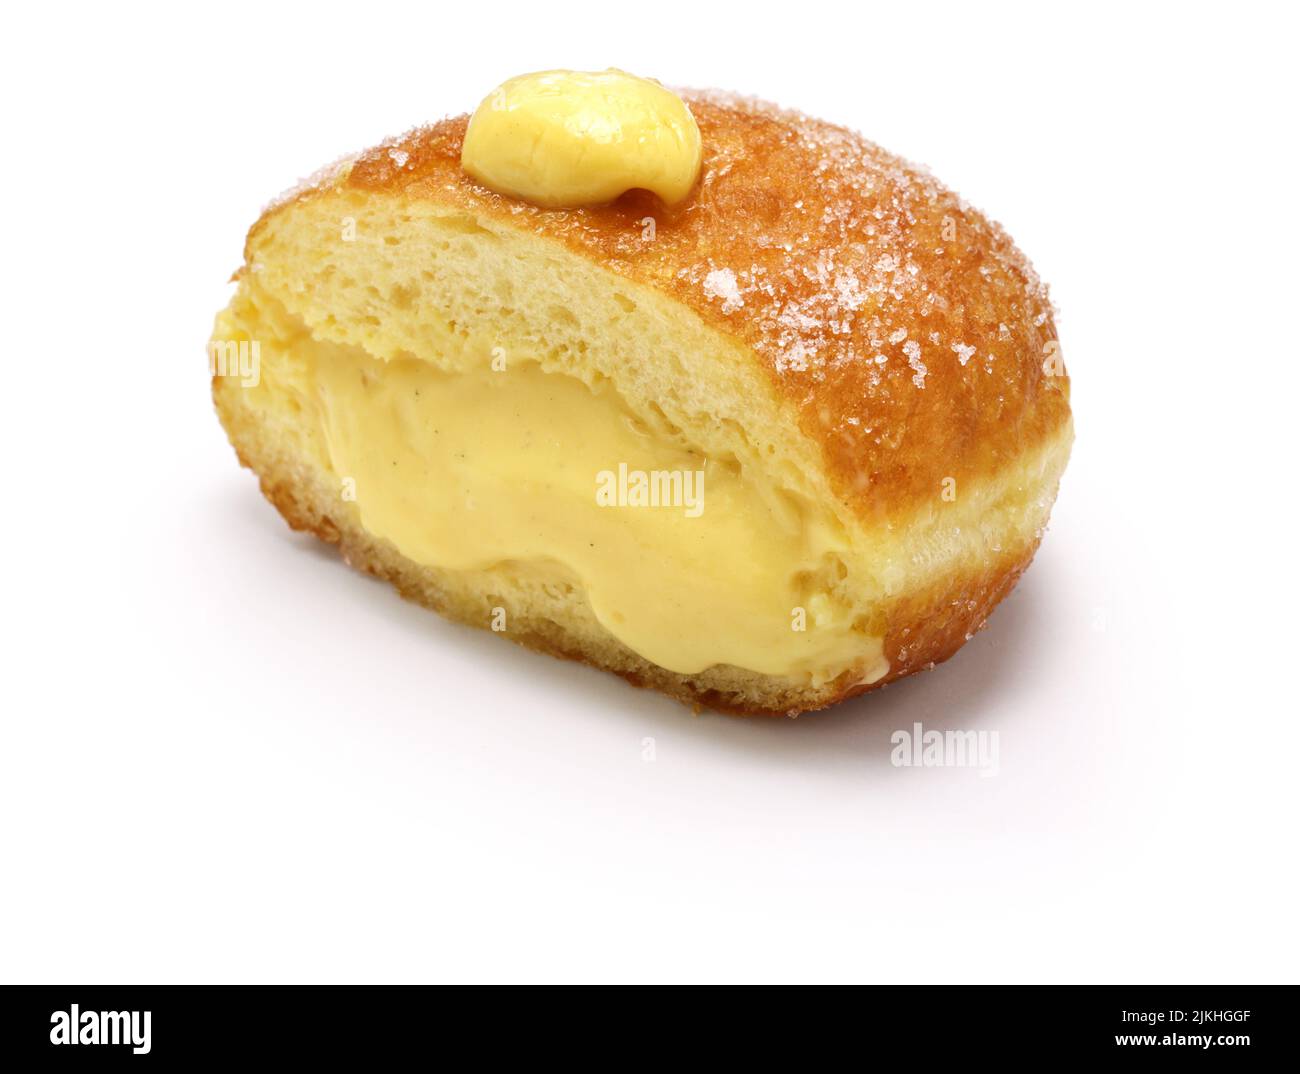 Bomboloni casero relleno de natillas, donuts rellenos italianos. Foto de stock